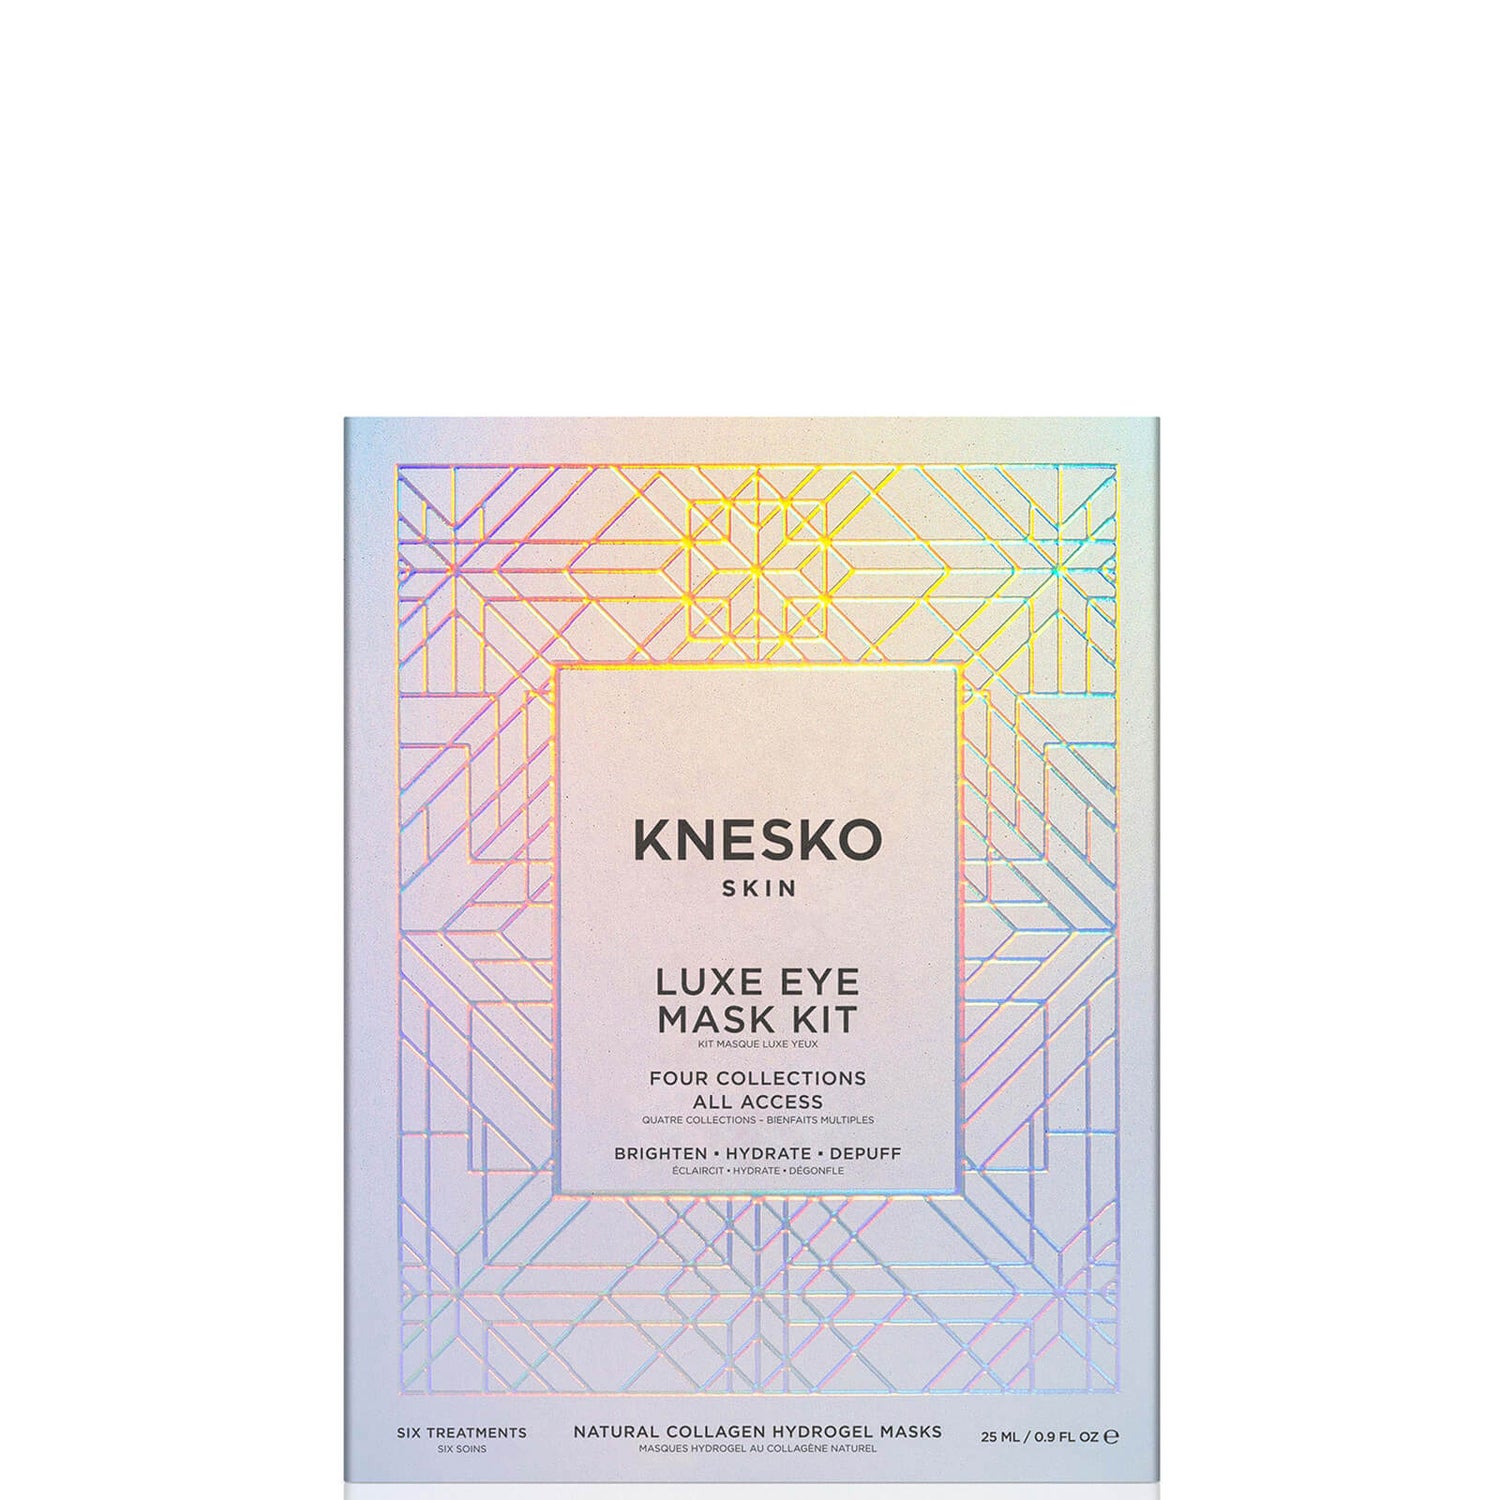 Knesko Skin The Luxe Eye Mask Kit (Worth $93.00)